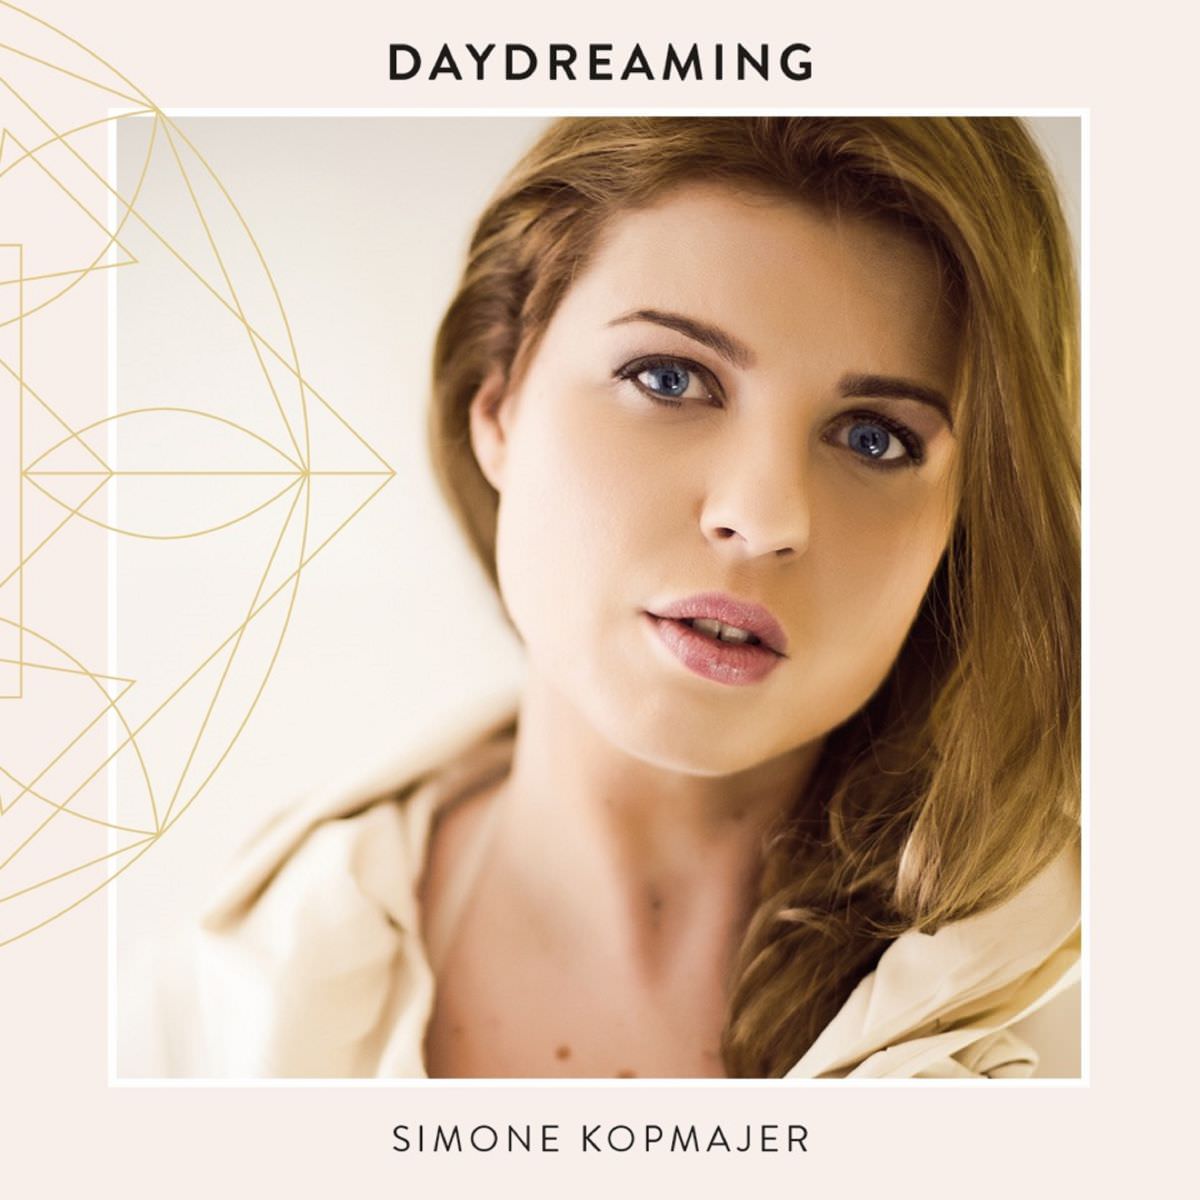 Simone Kopmajer - Daydreaming (2017) [HDTracks FLAC 24bit/192kHz]